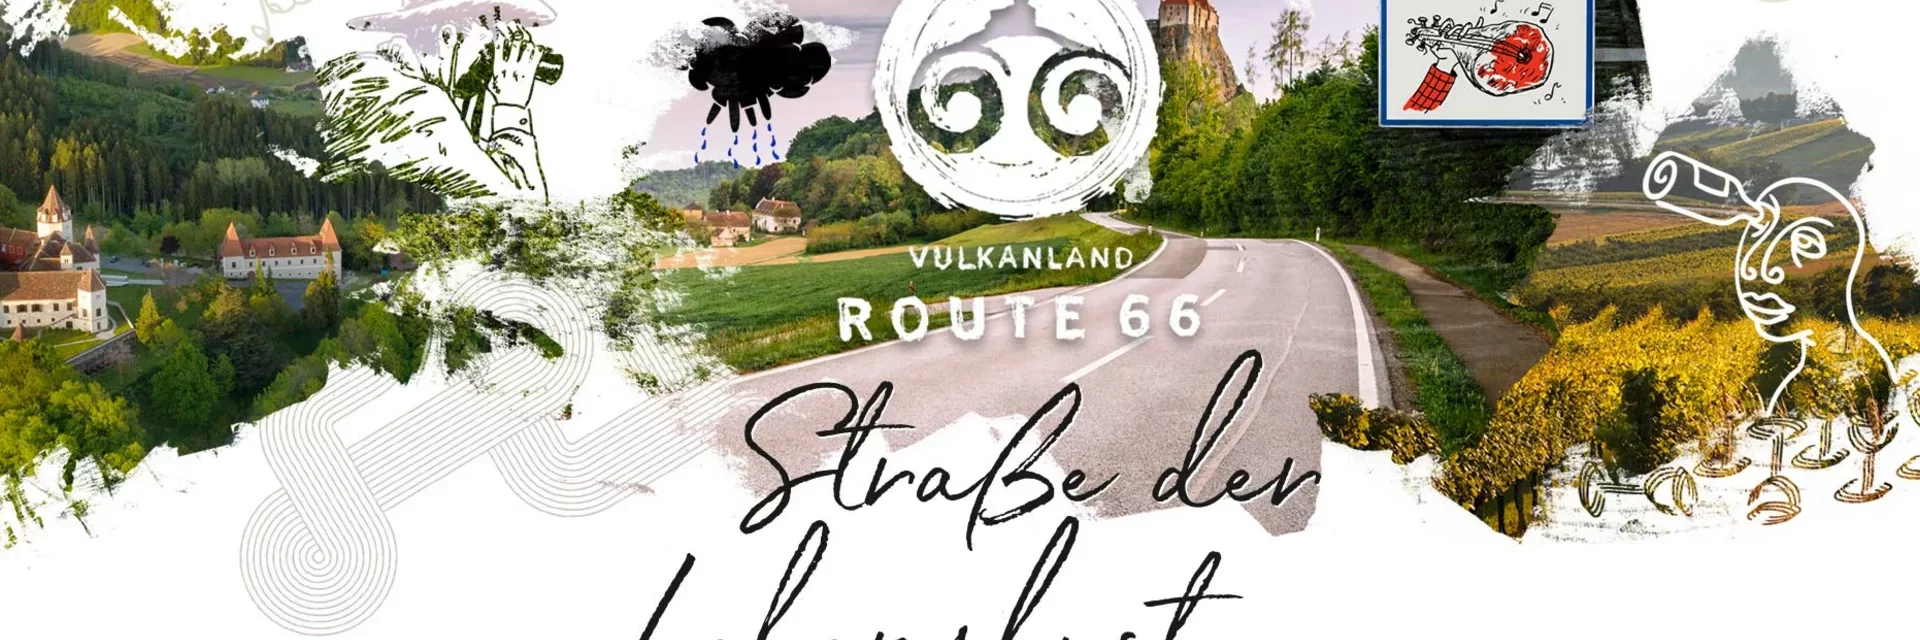 Straße der Lebenslust - Vulkanland Route 66 | © Thermen- & Vulkanland | © Steirisches Vulkanland 